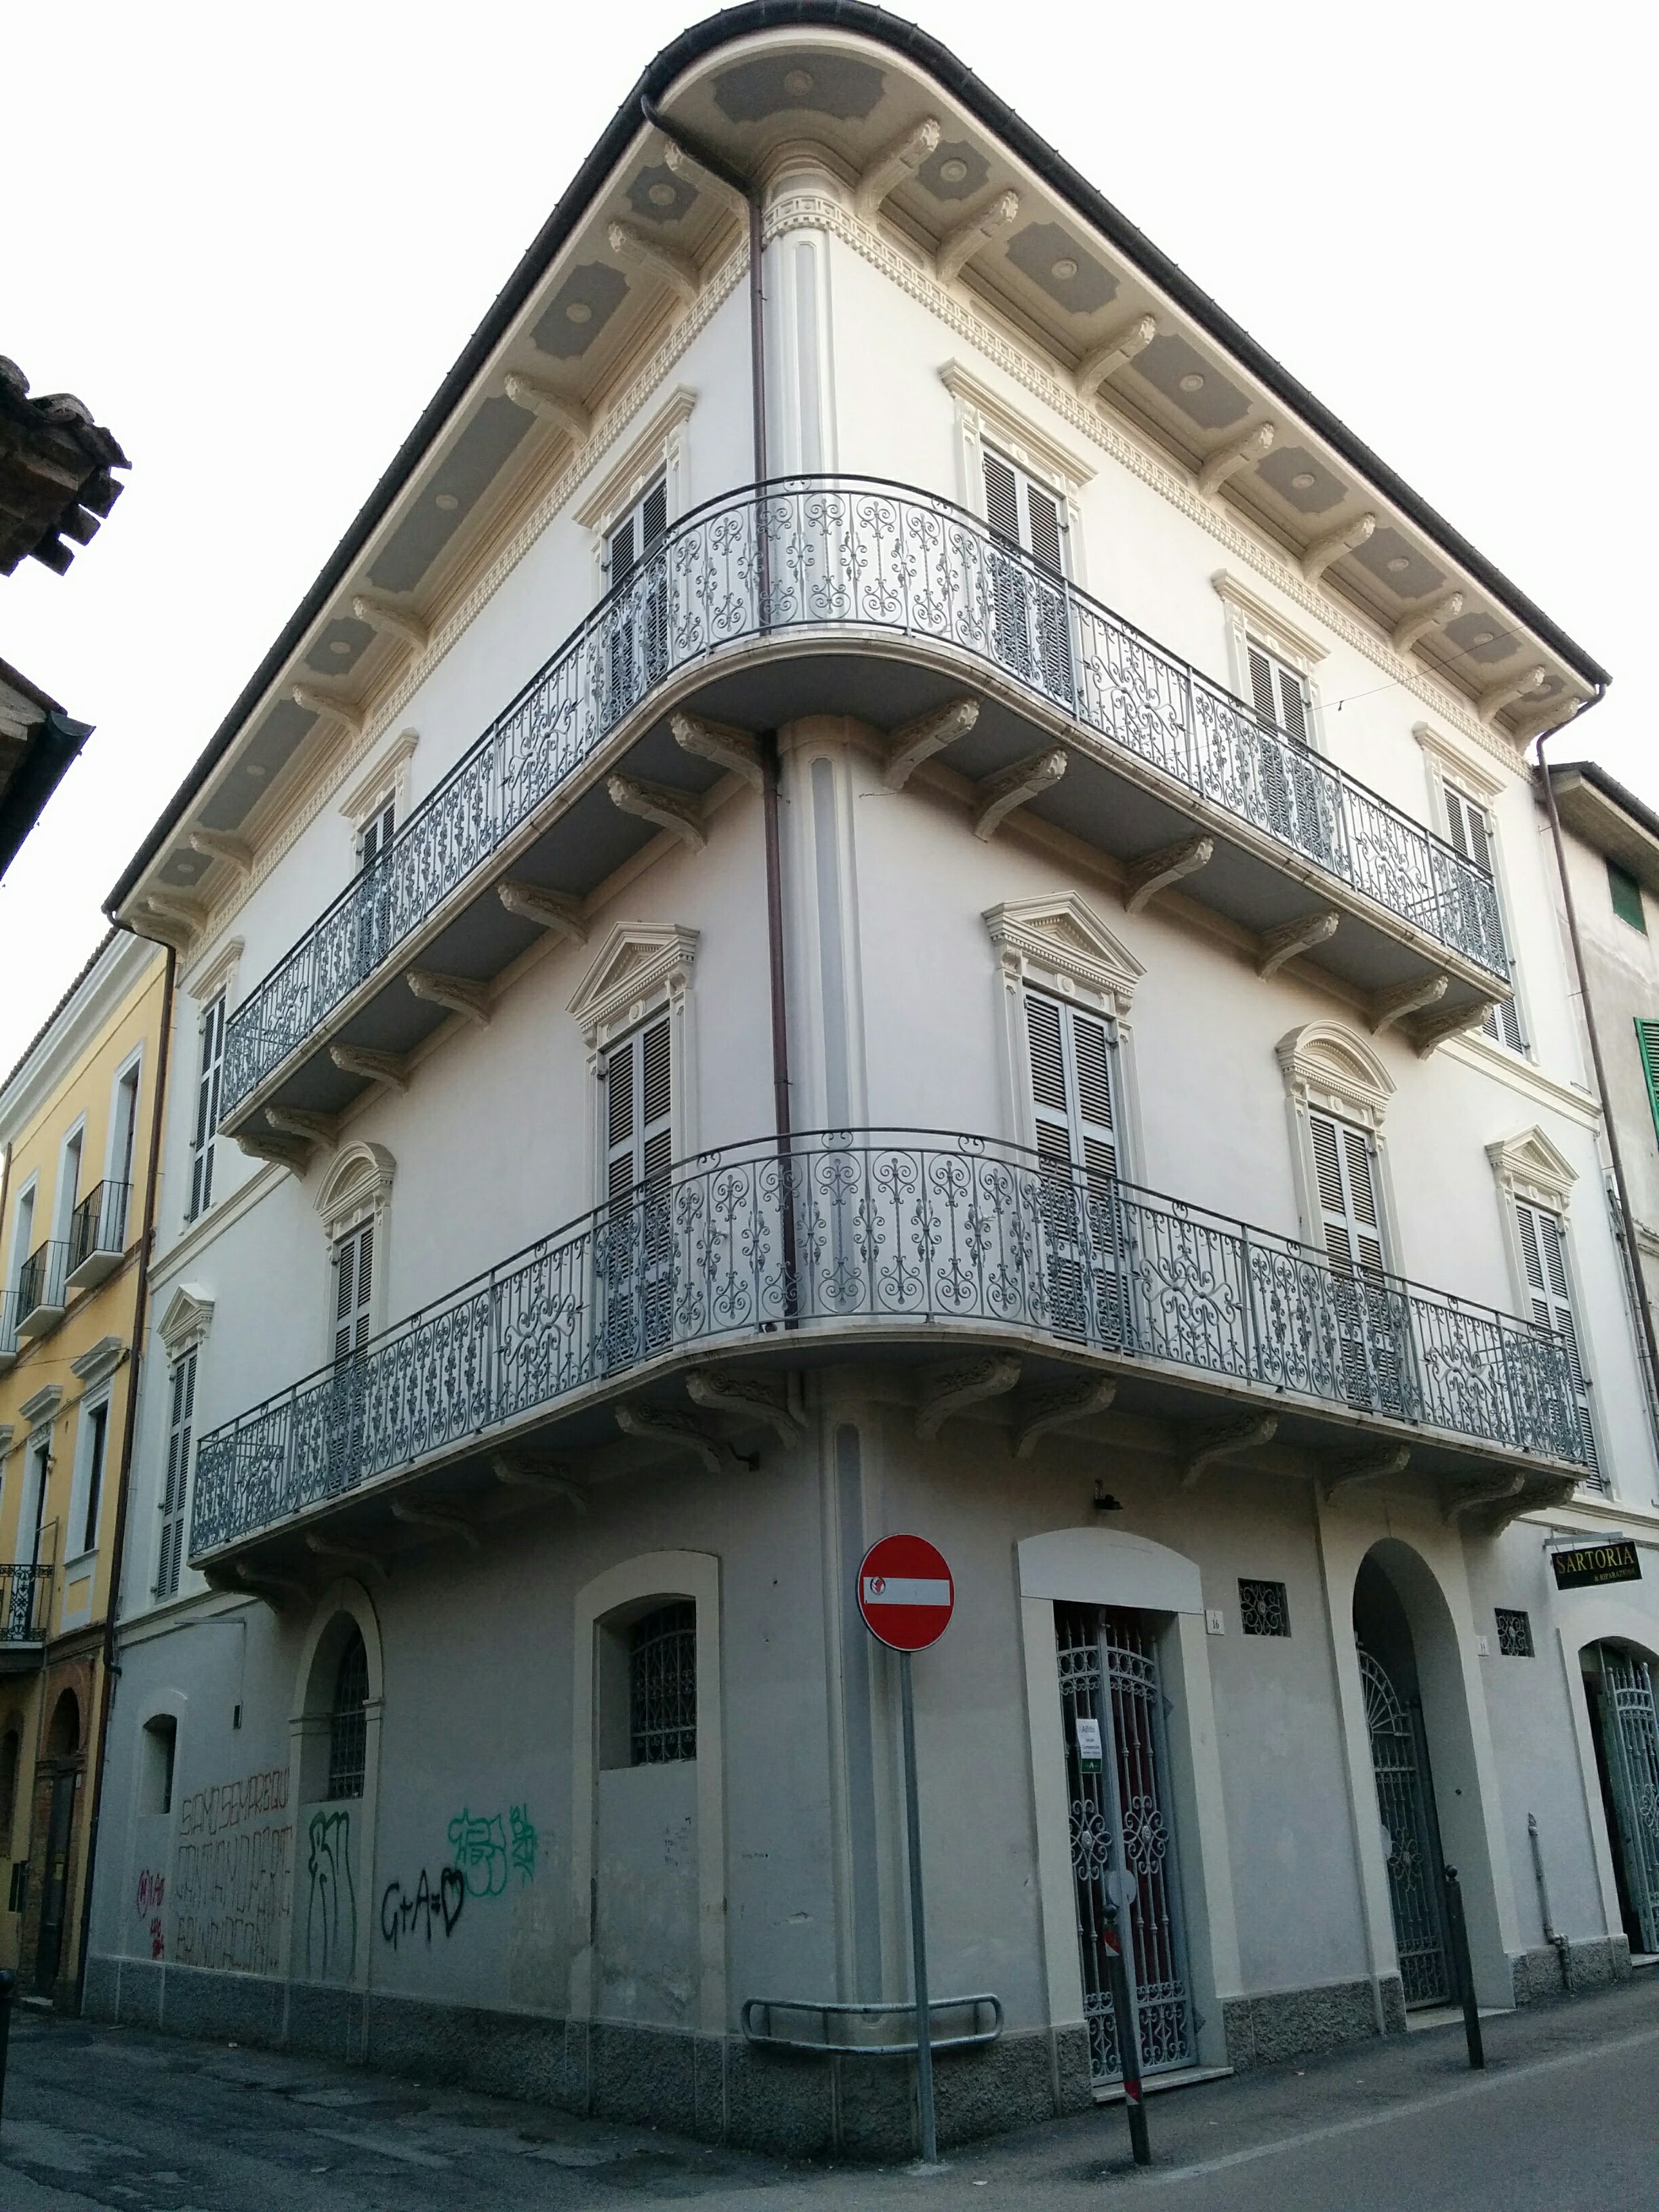 Palazzo in Largo Melatino (palazzo, signorile, urbano) - Teramo (TE) 